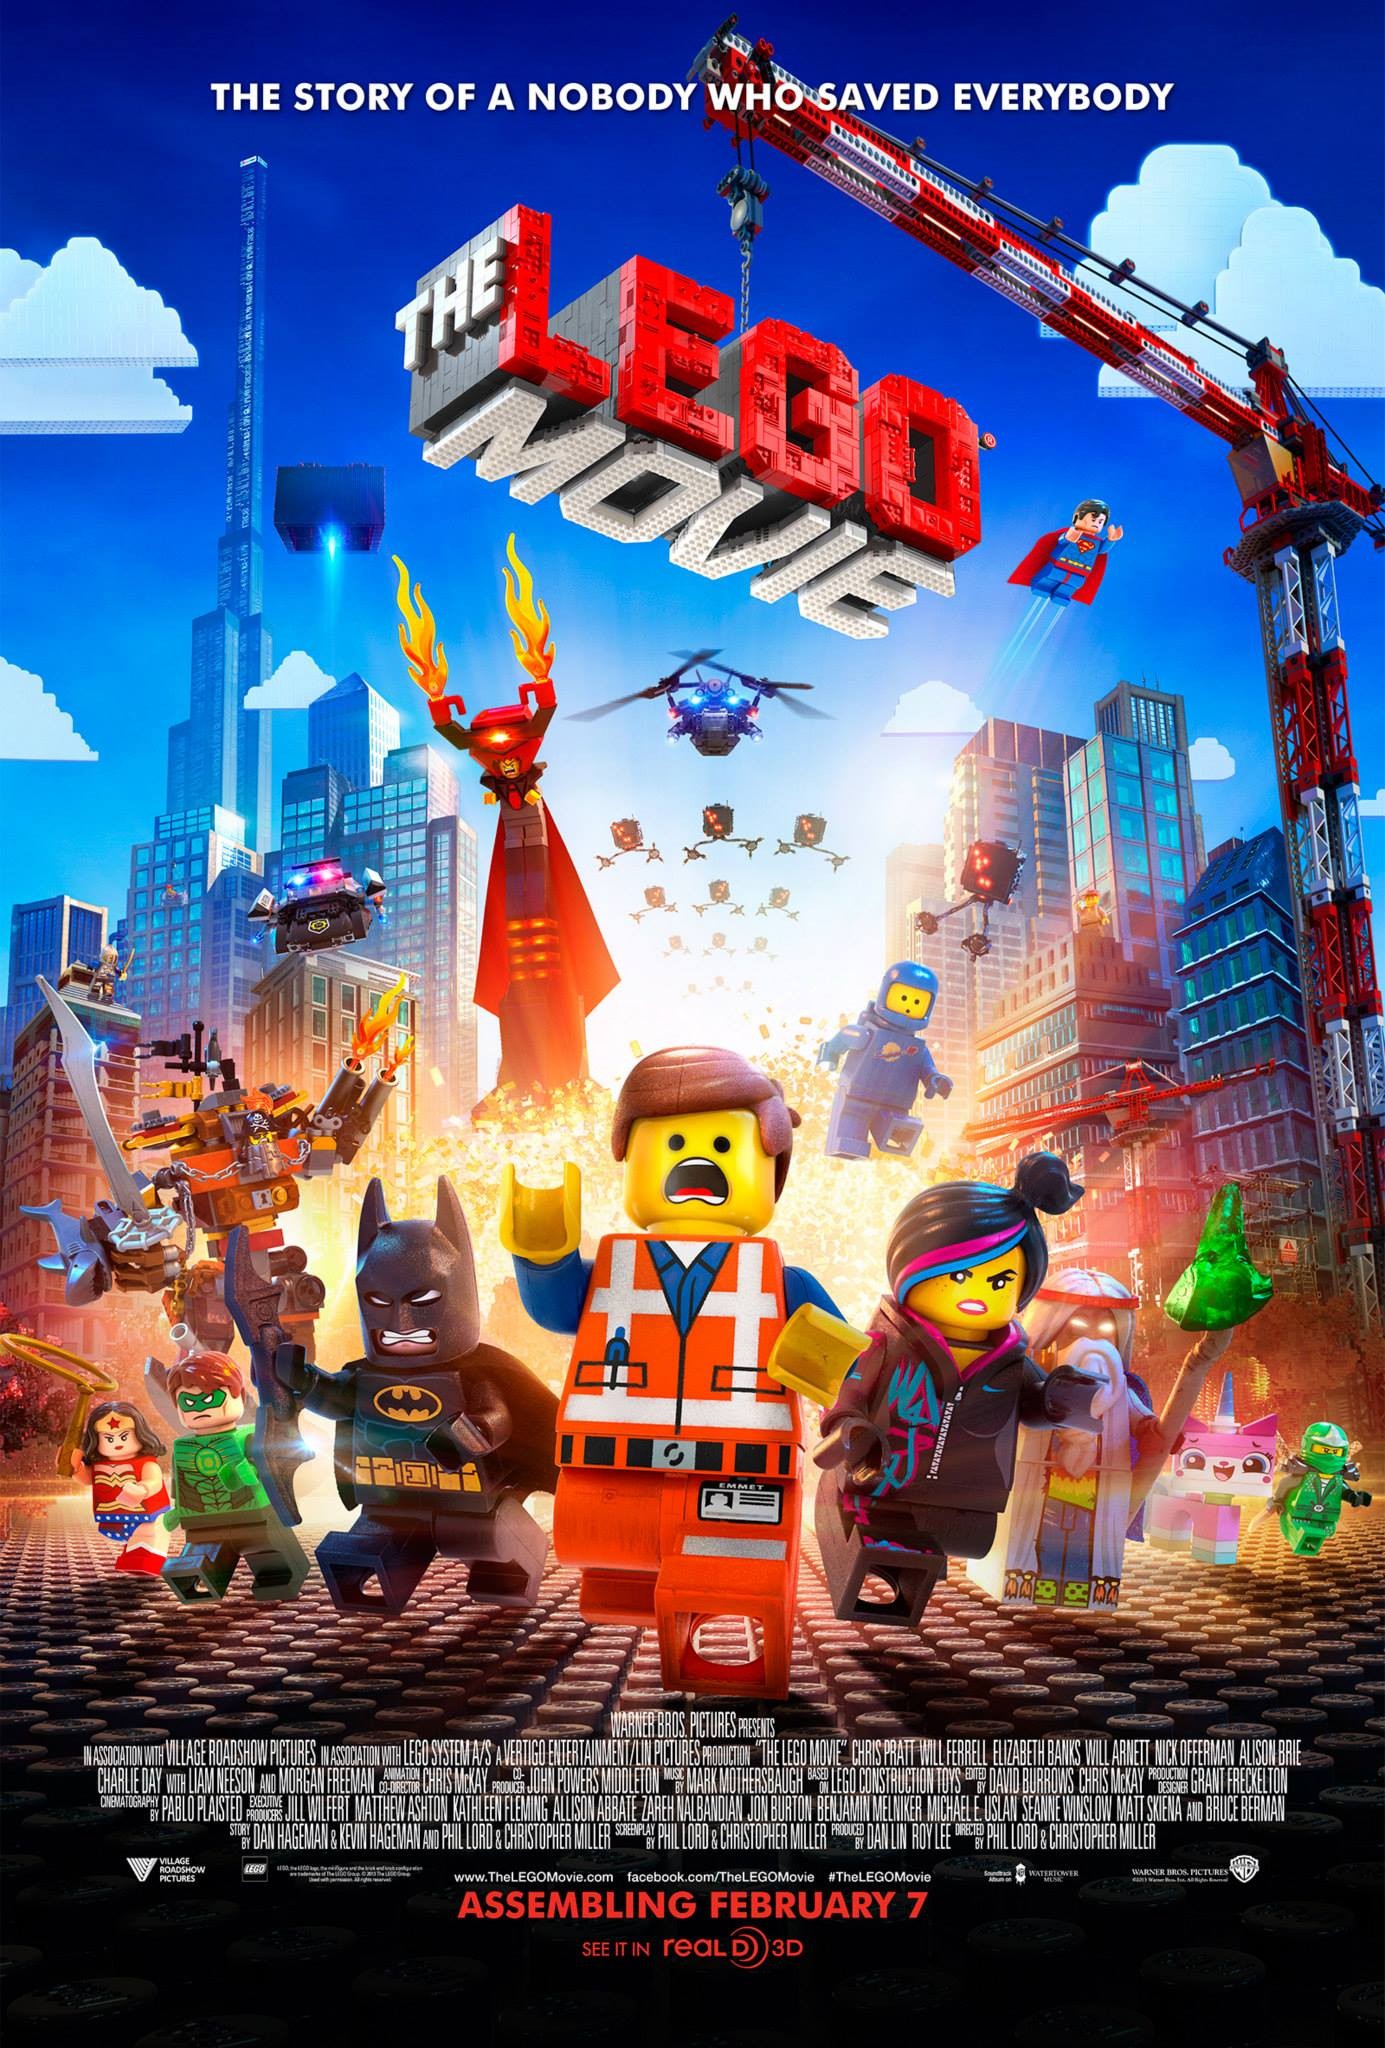 The LEGO Movie Warner Bros pic